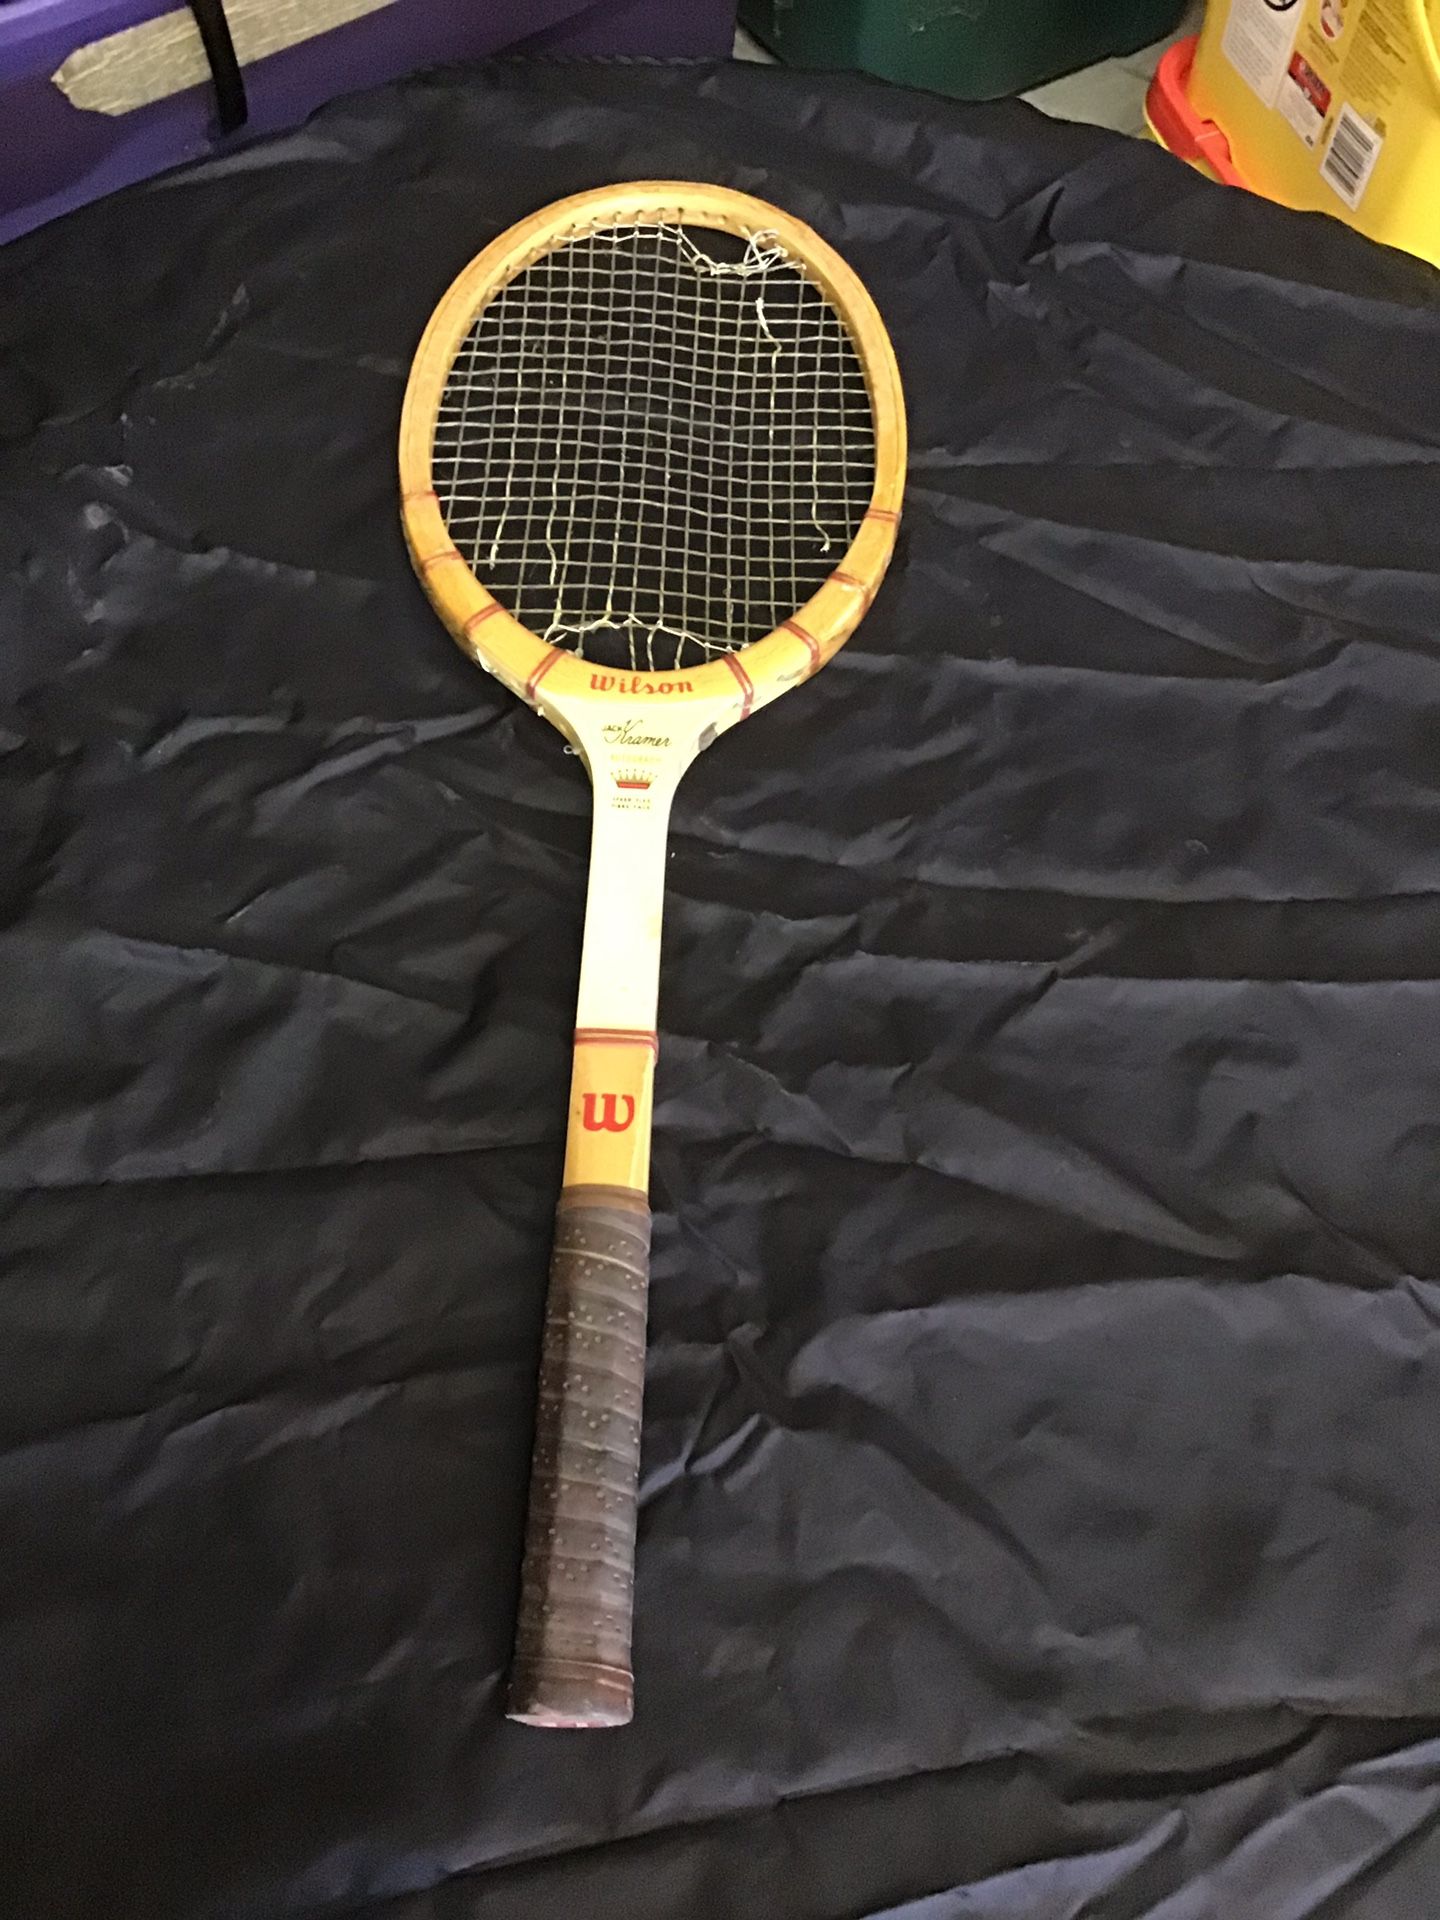 Wilson tennis racket (Jack Kramer)